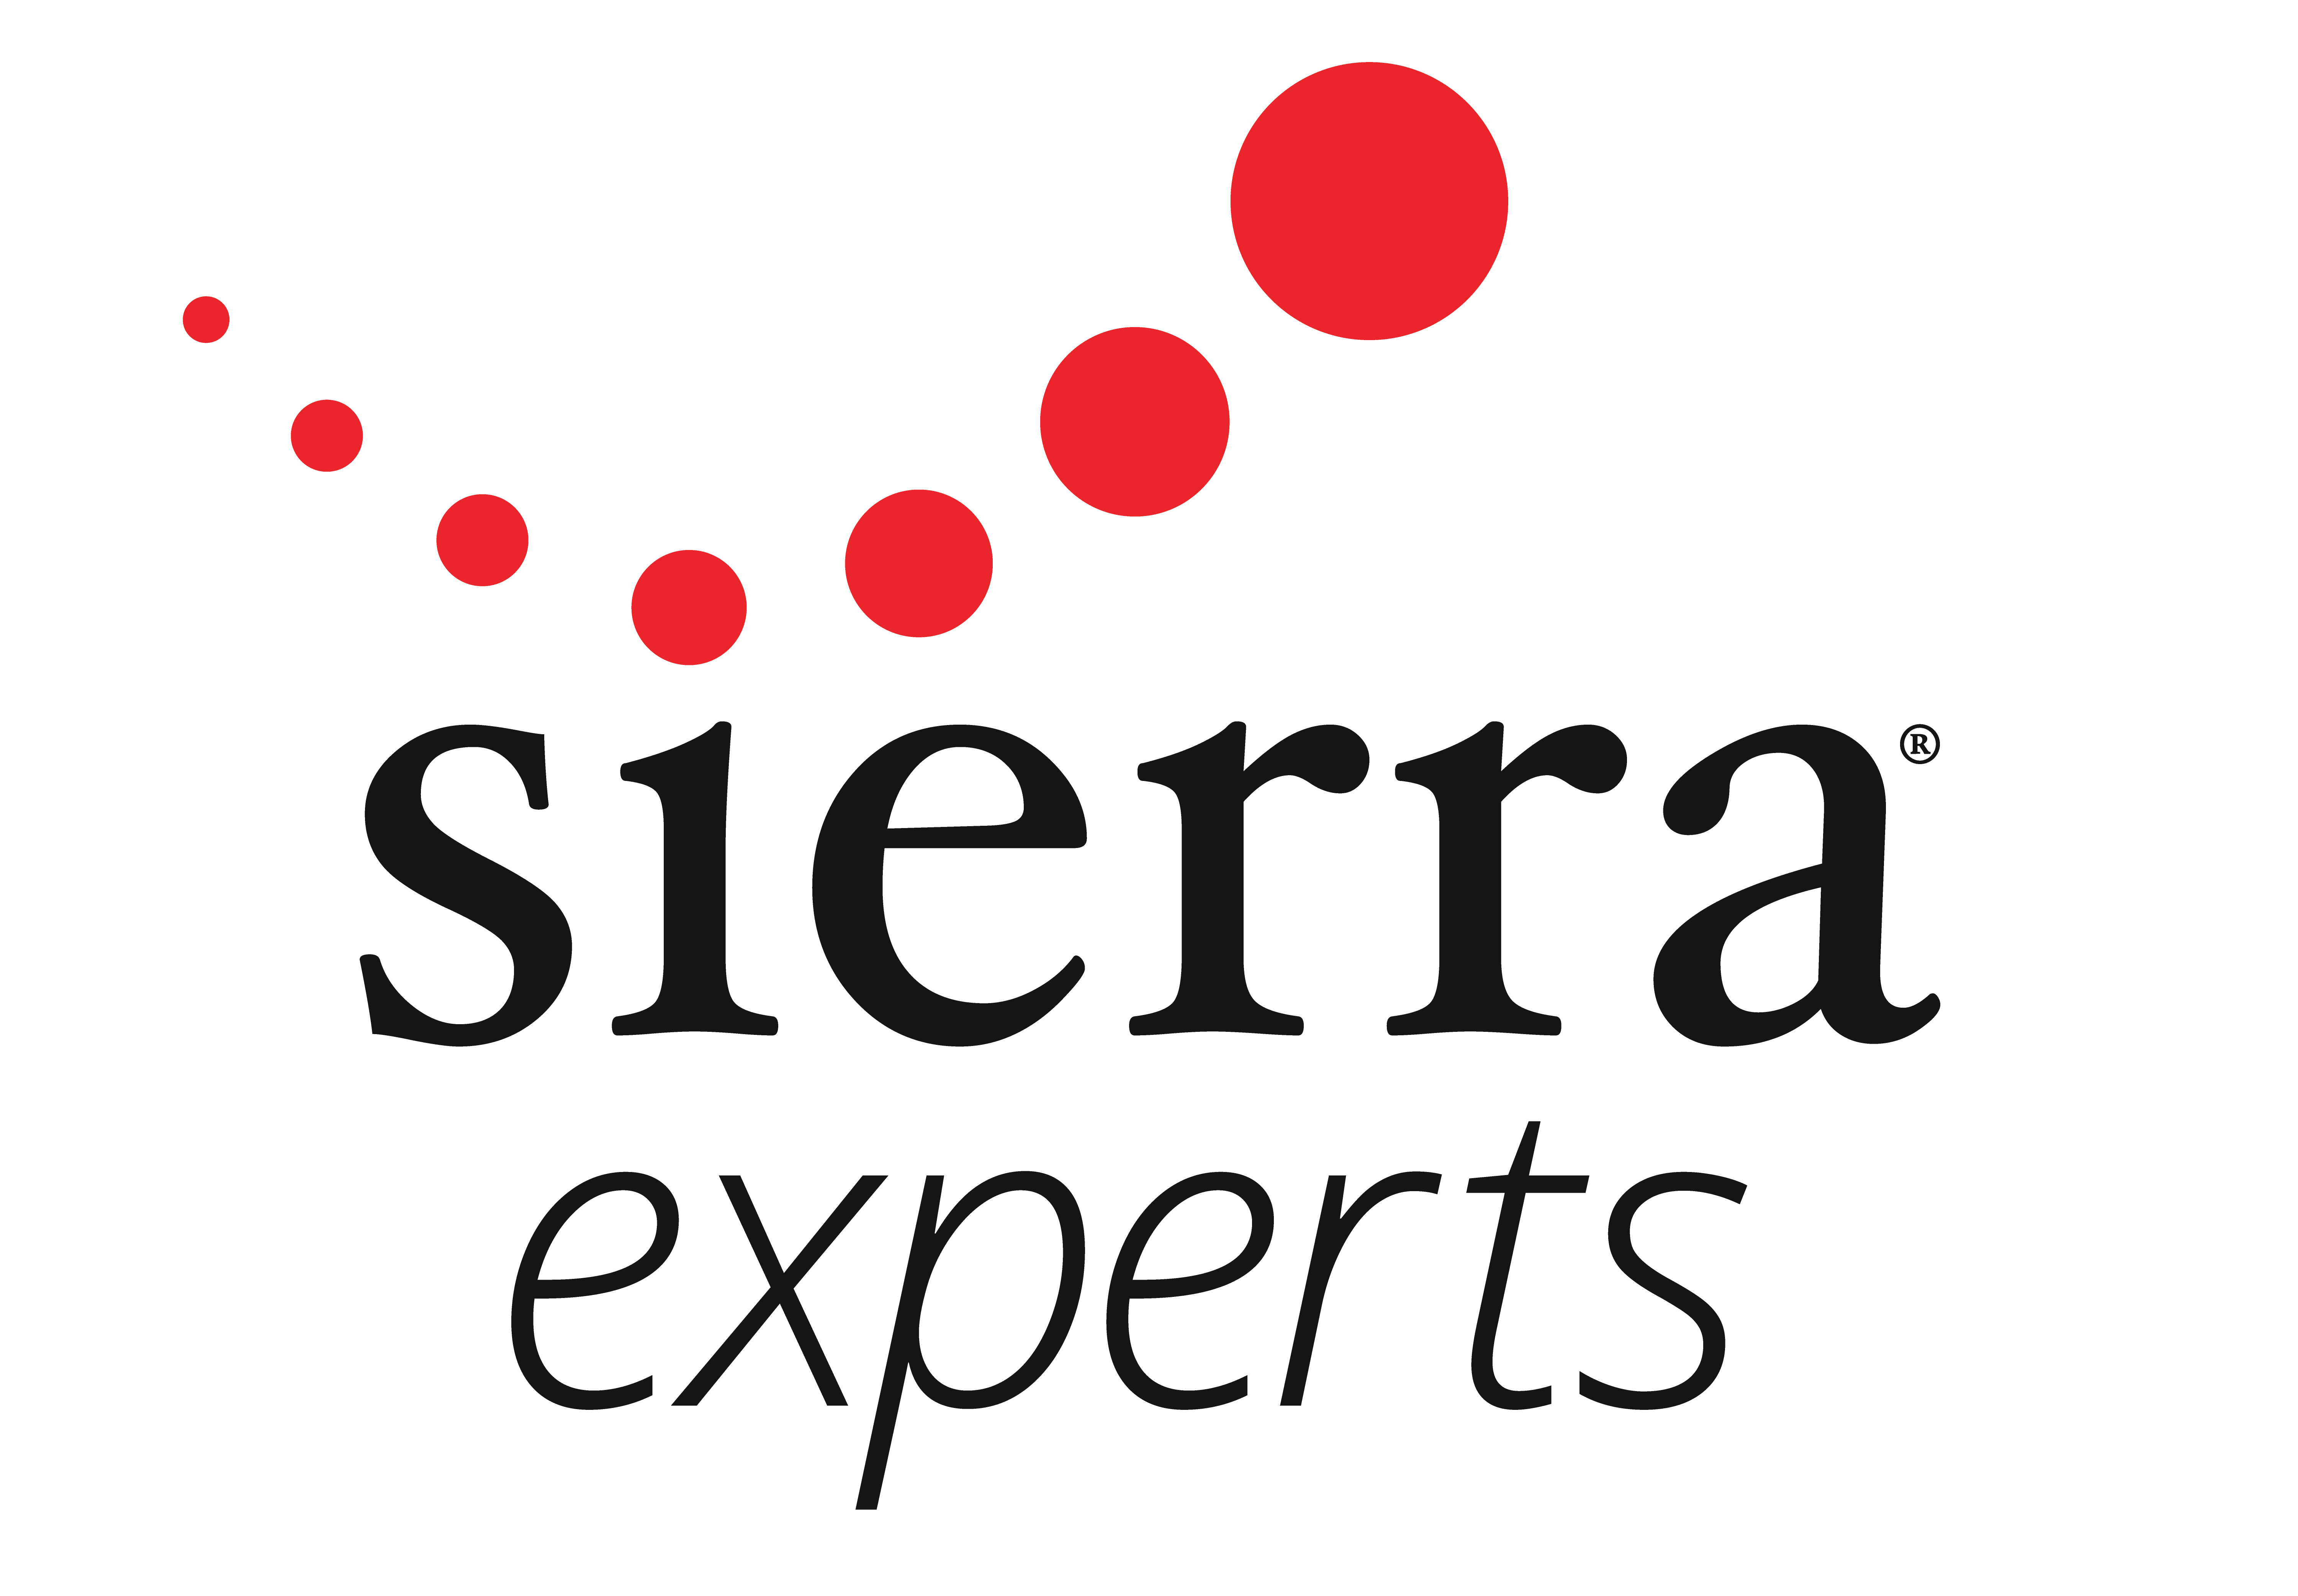 Sierra Experts